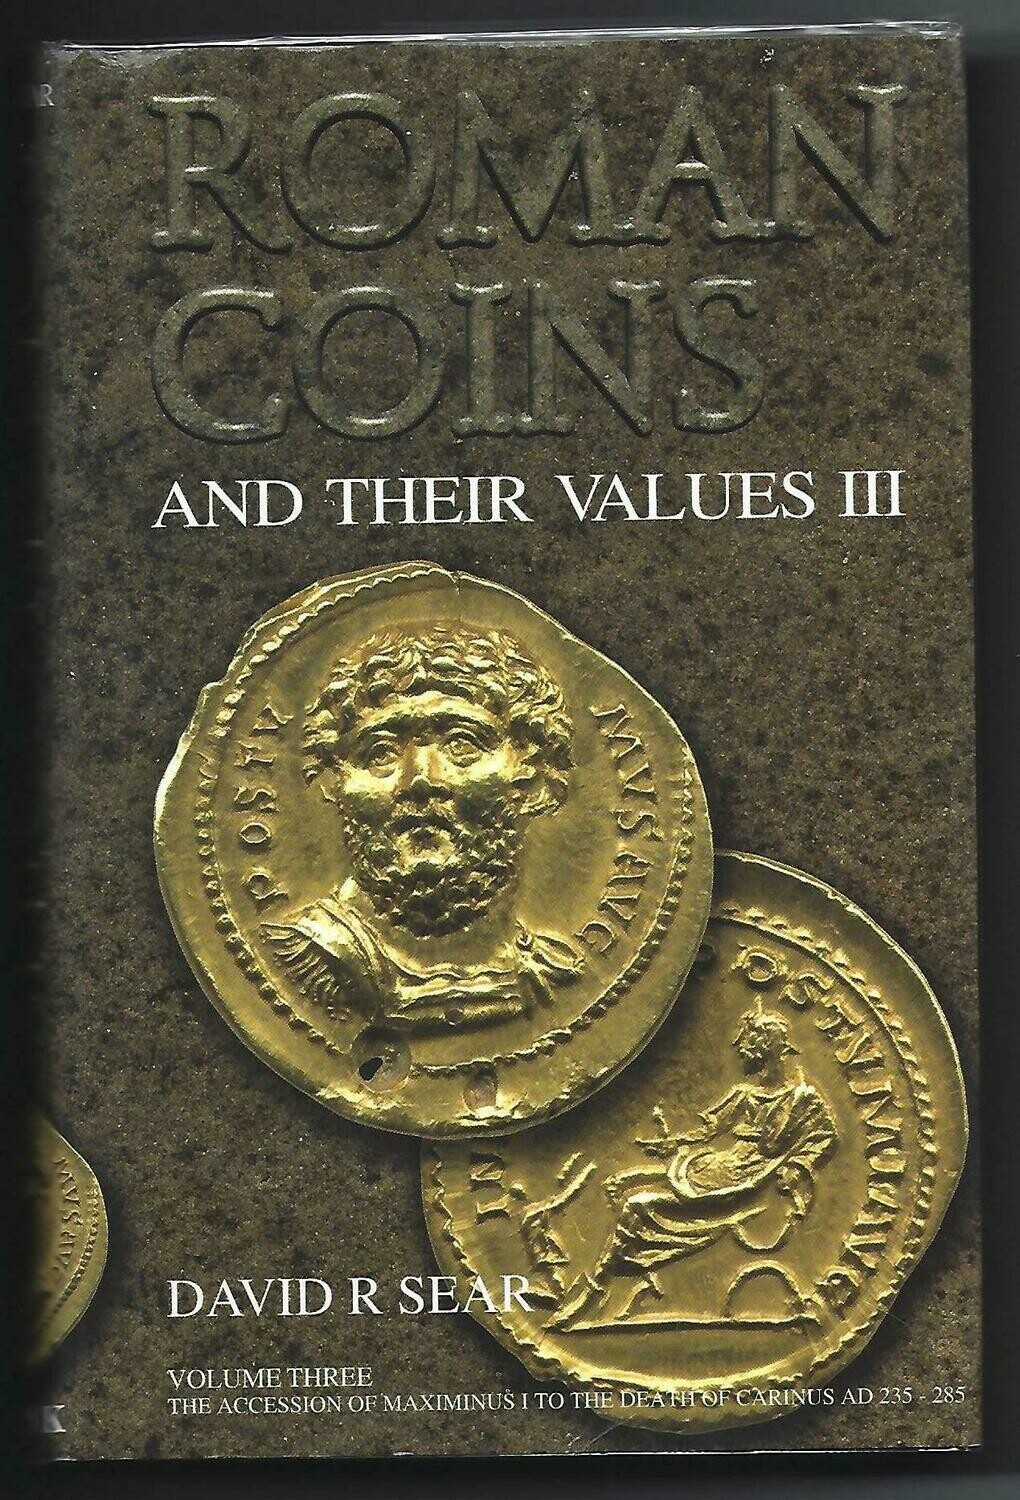 Ancients; David R. Sear, "Roman Coins and their values, Volume 3."